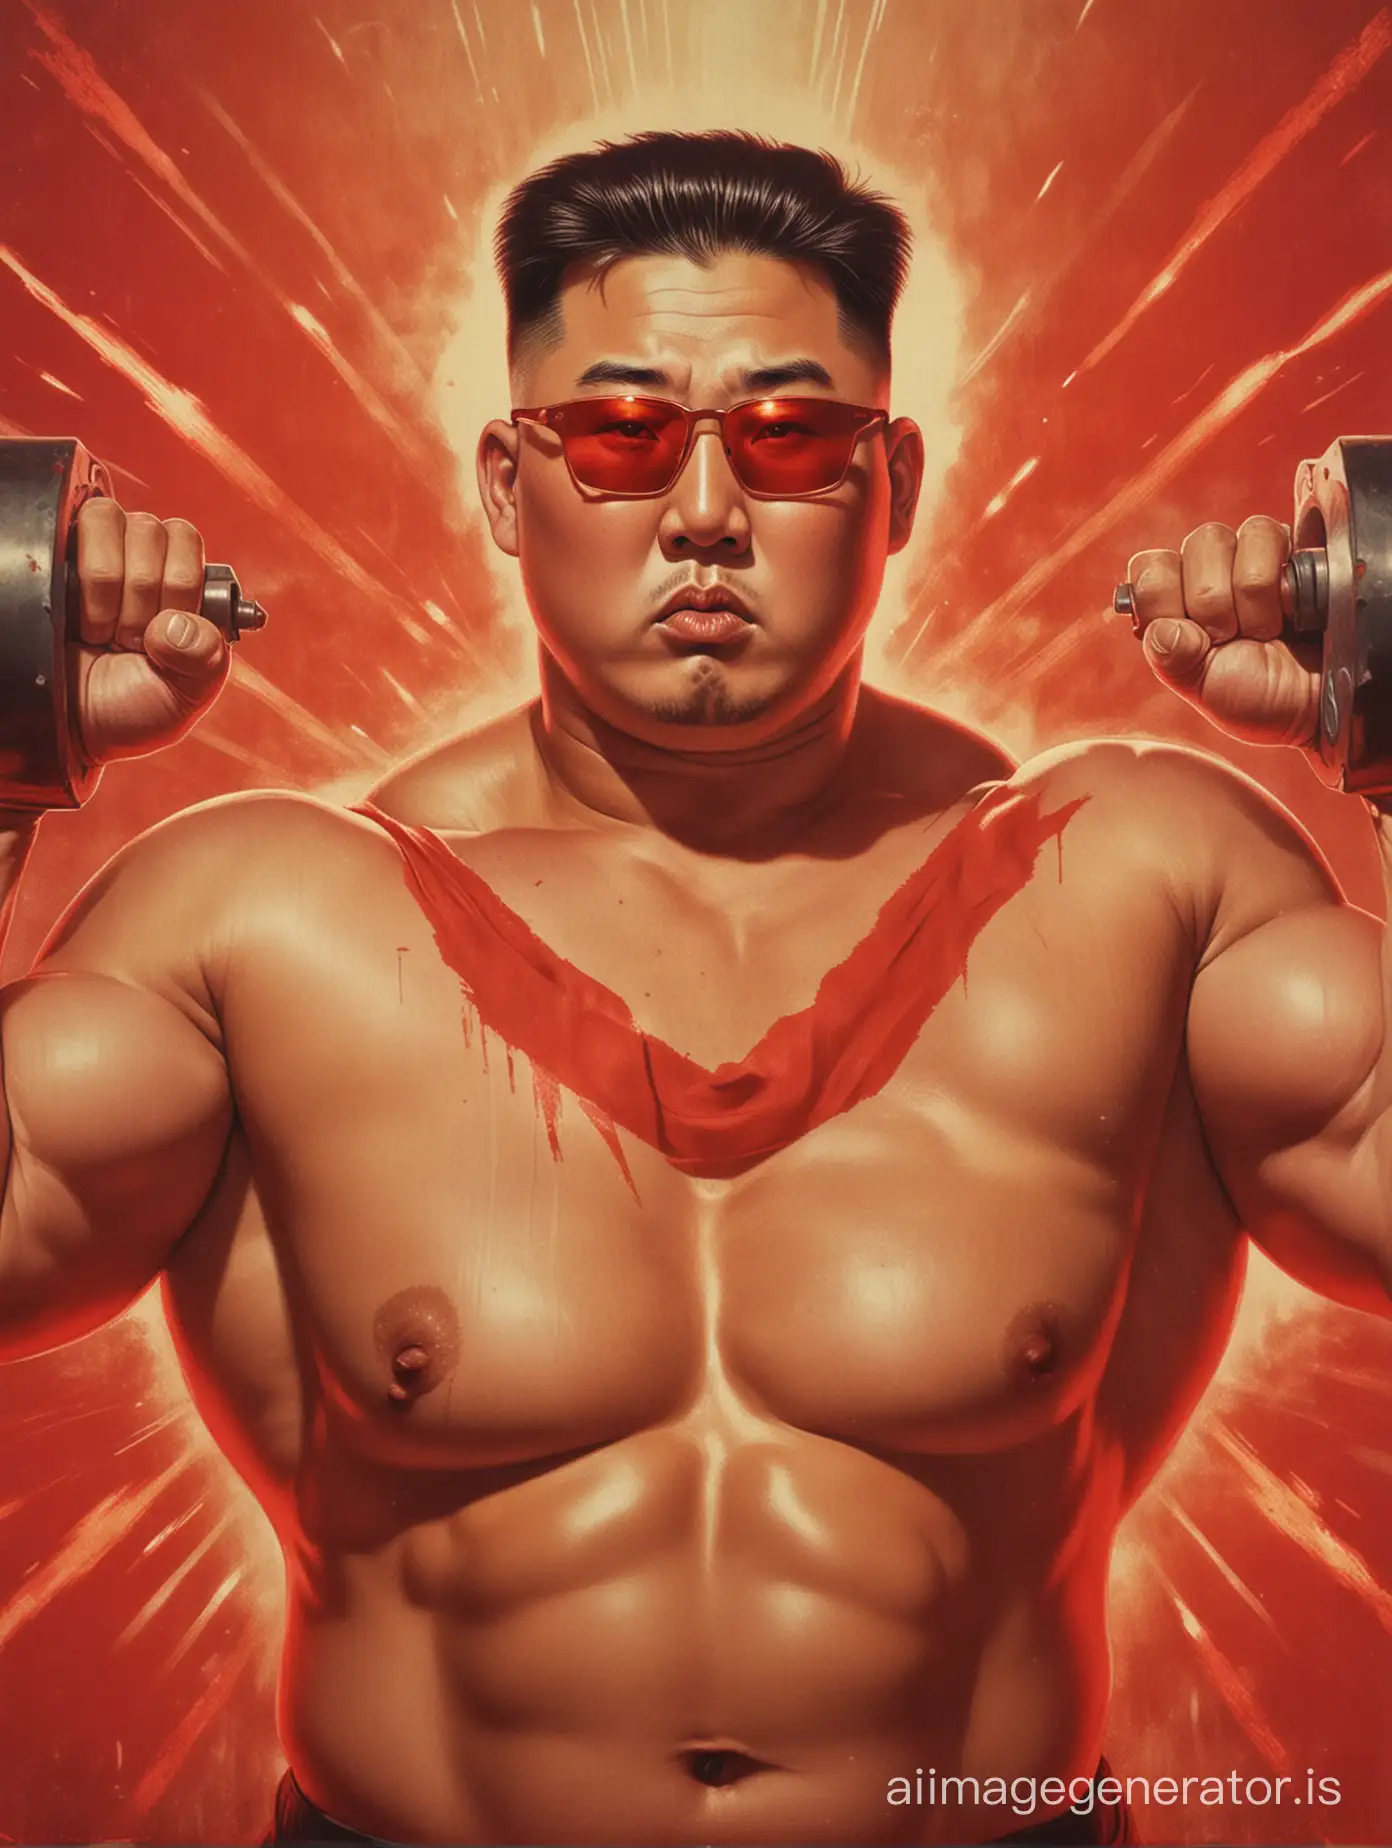 Kim-Jong-Un-Bodybuilder-Portrait-with-Red-Laser-Eyes-Vintage-North-Korean-Propaganda-Style